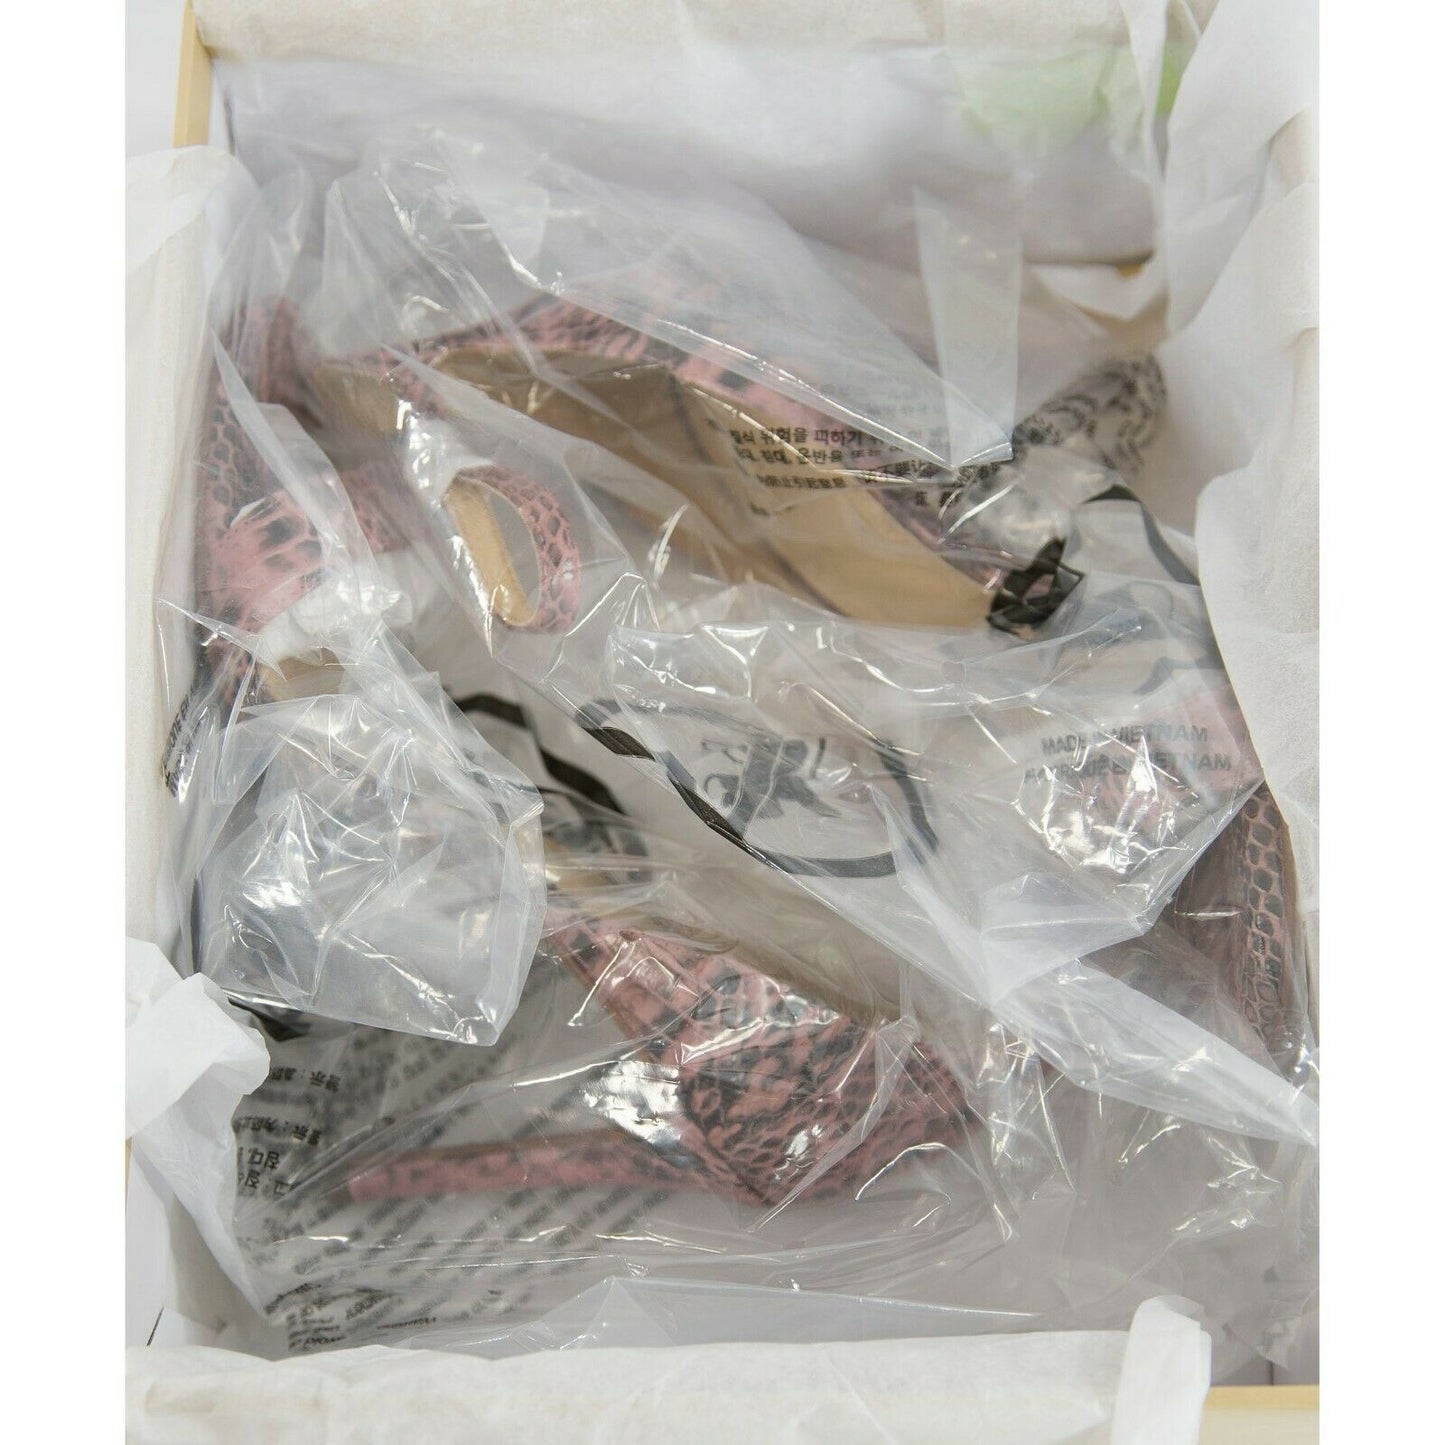 Michael Kors Harper Rose Genuine Snake Leather High Heel Pumps 6.5 NIB